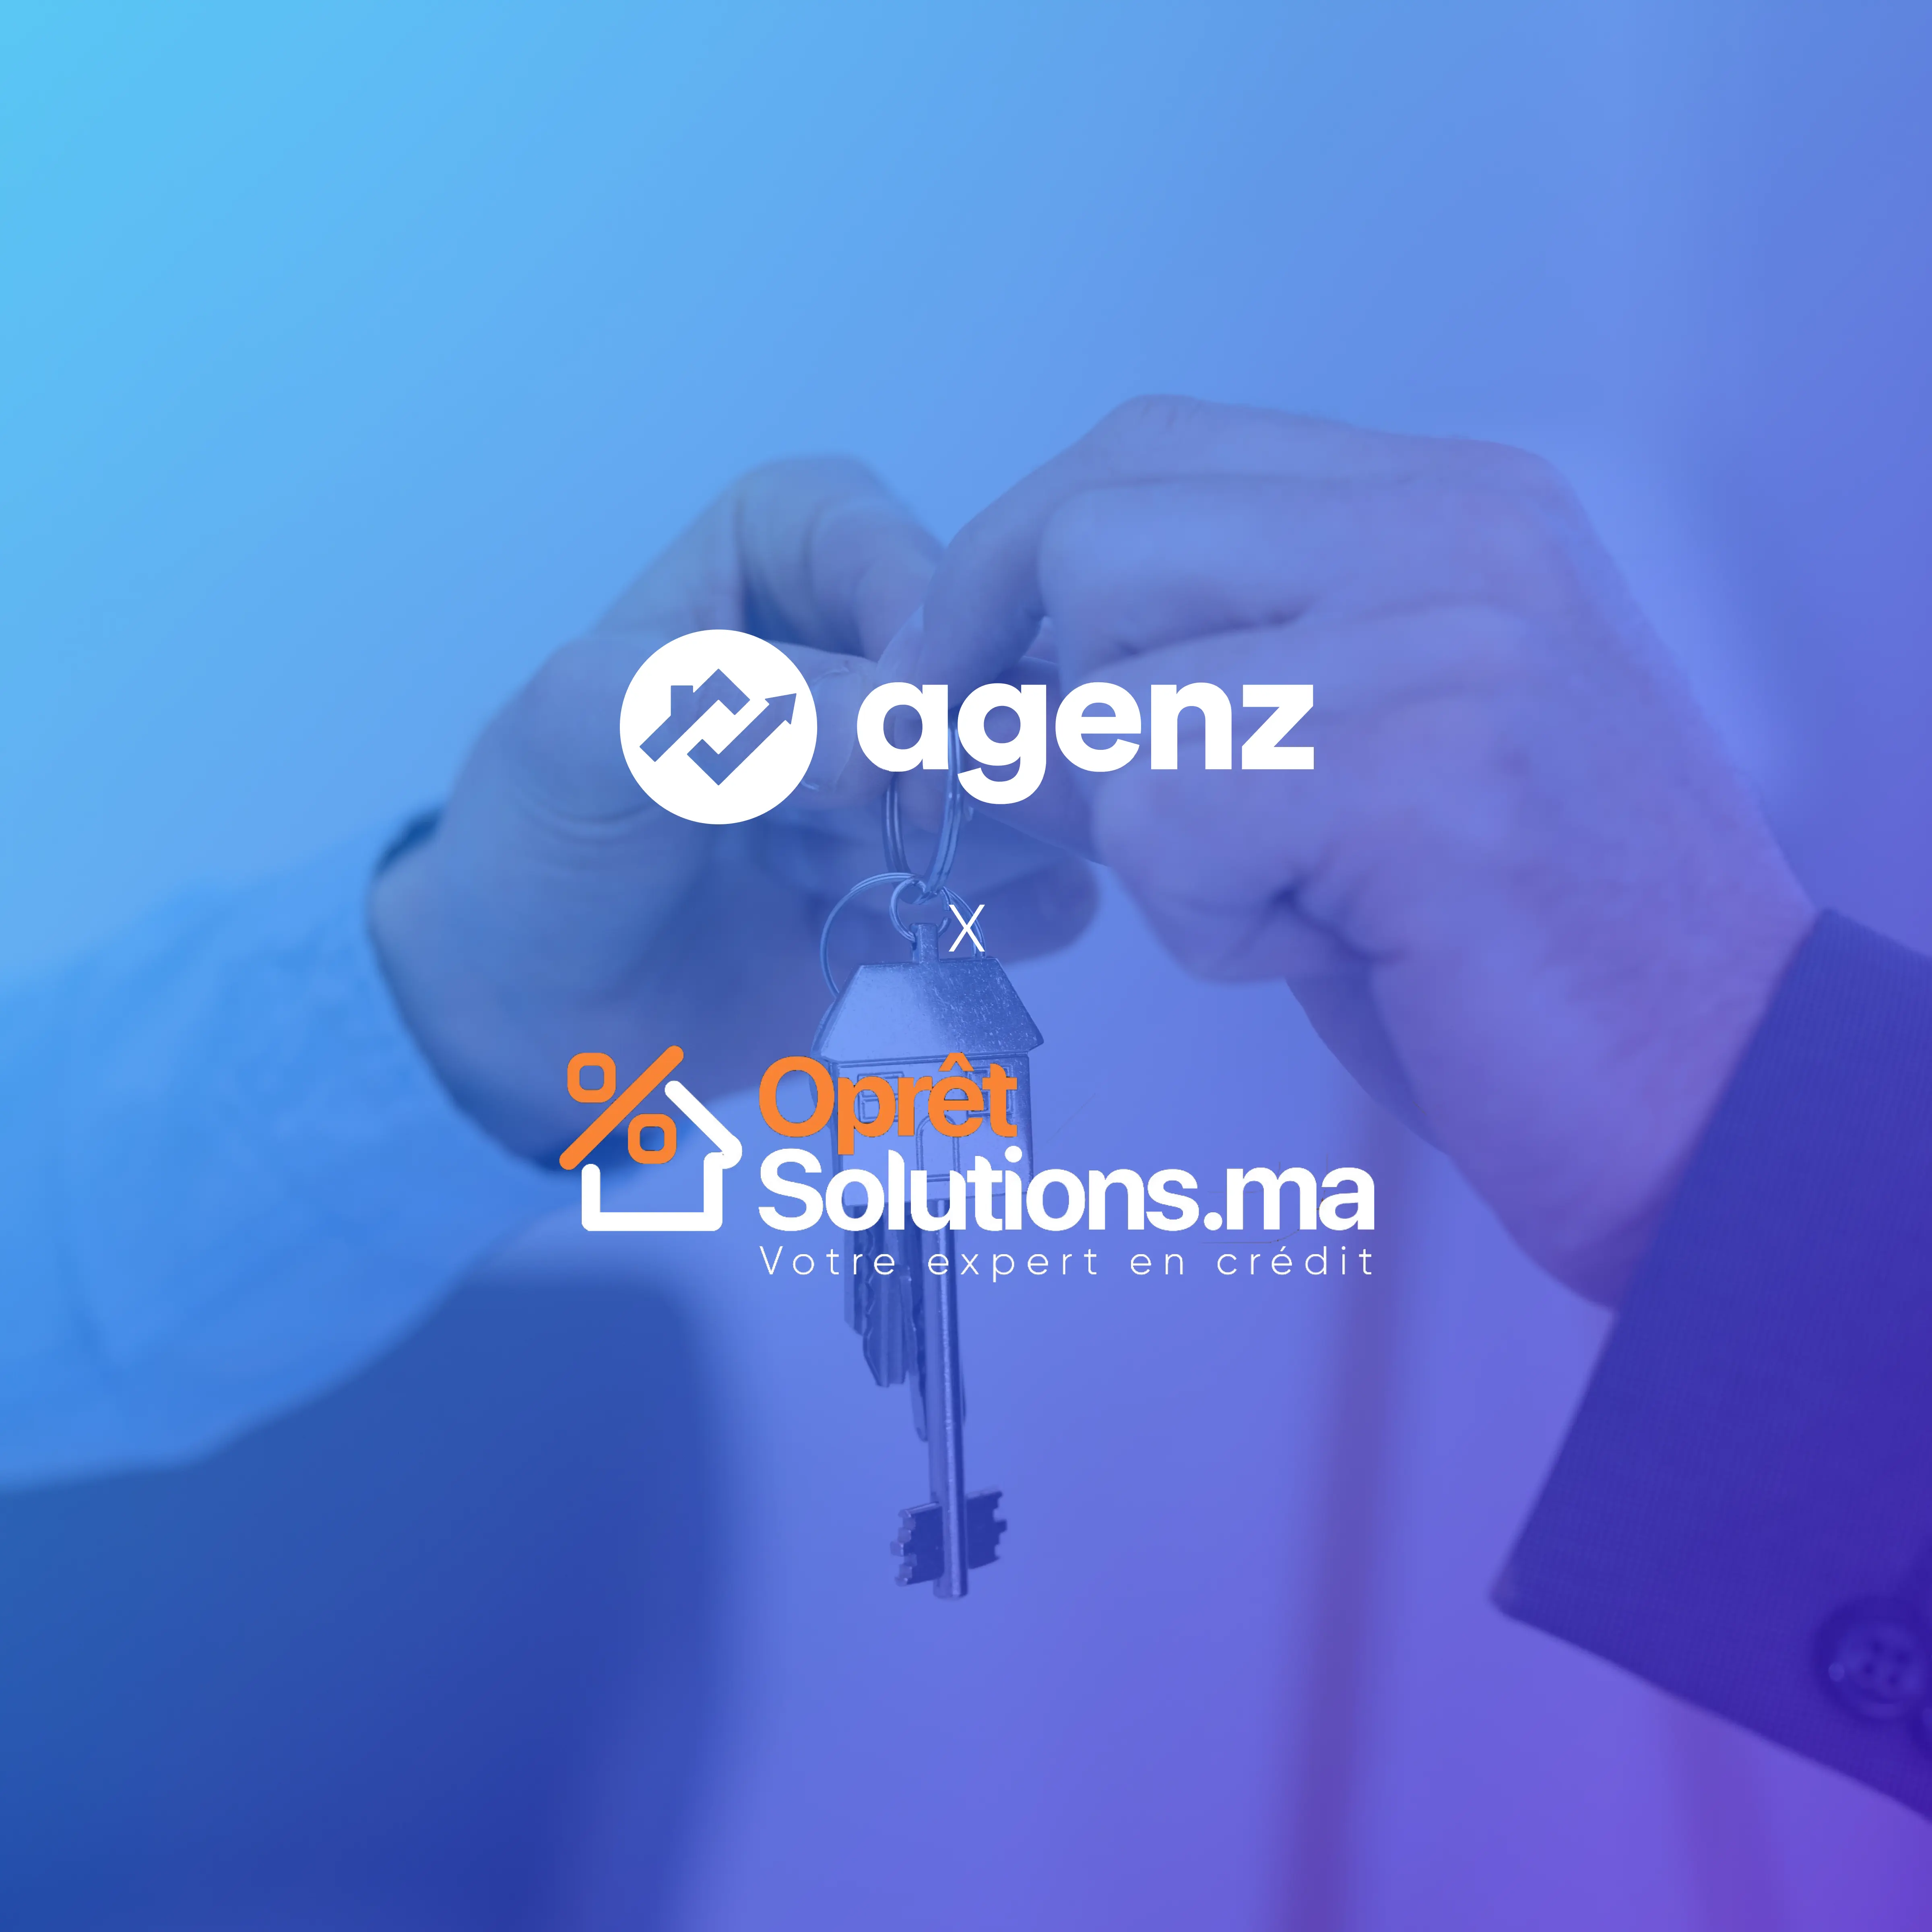 agenz-opret-solutions